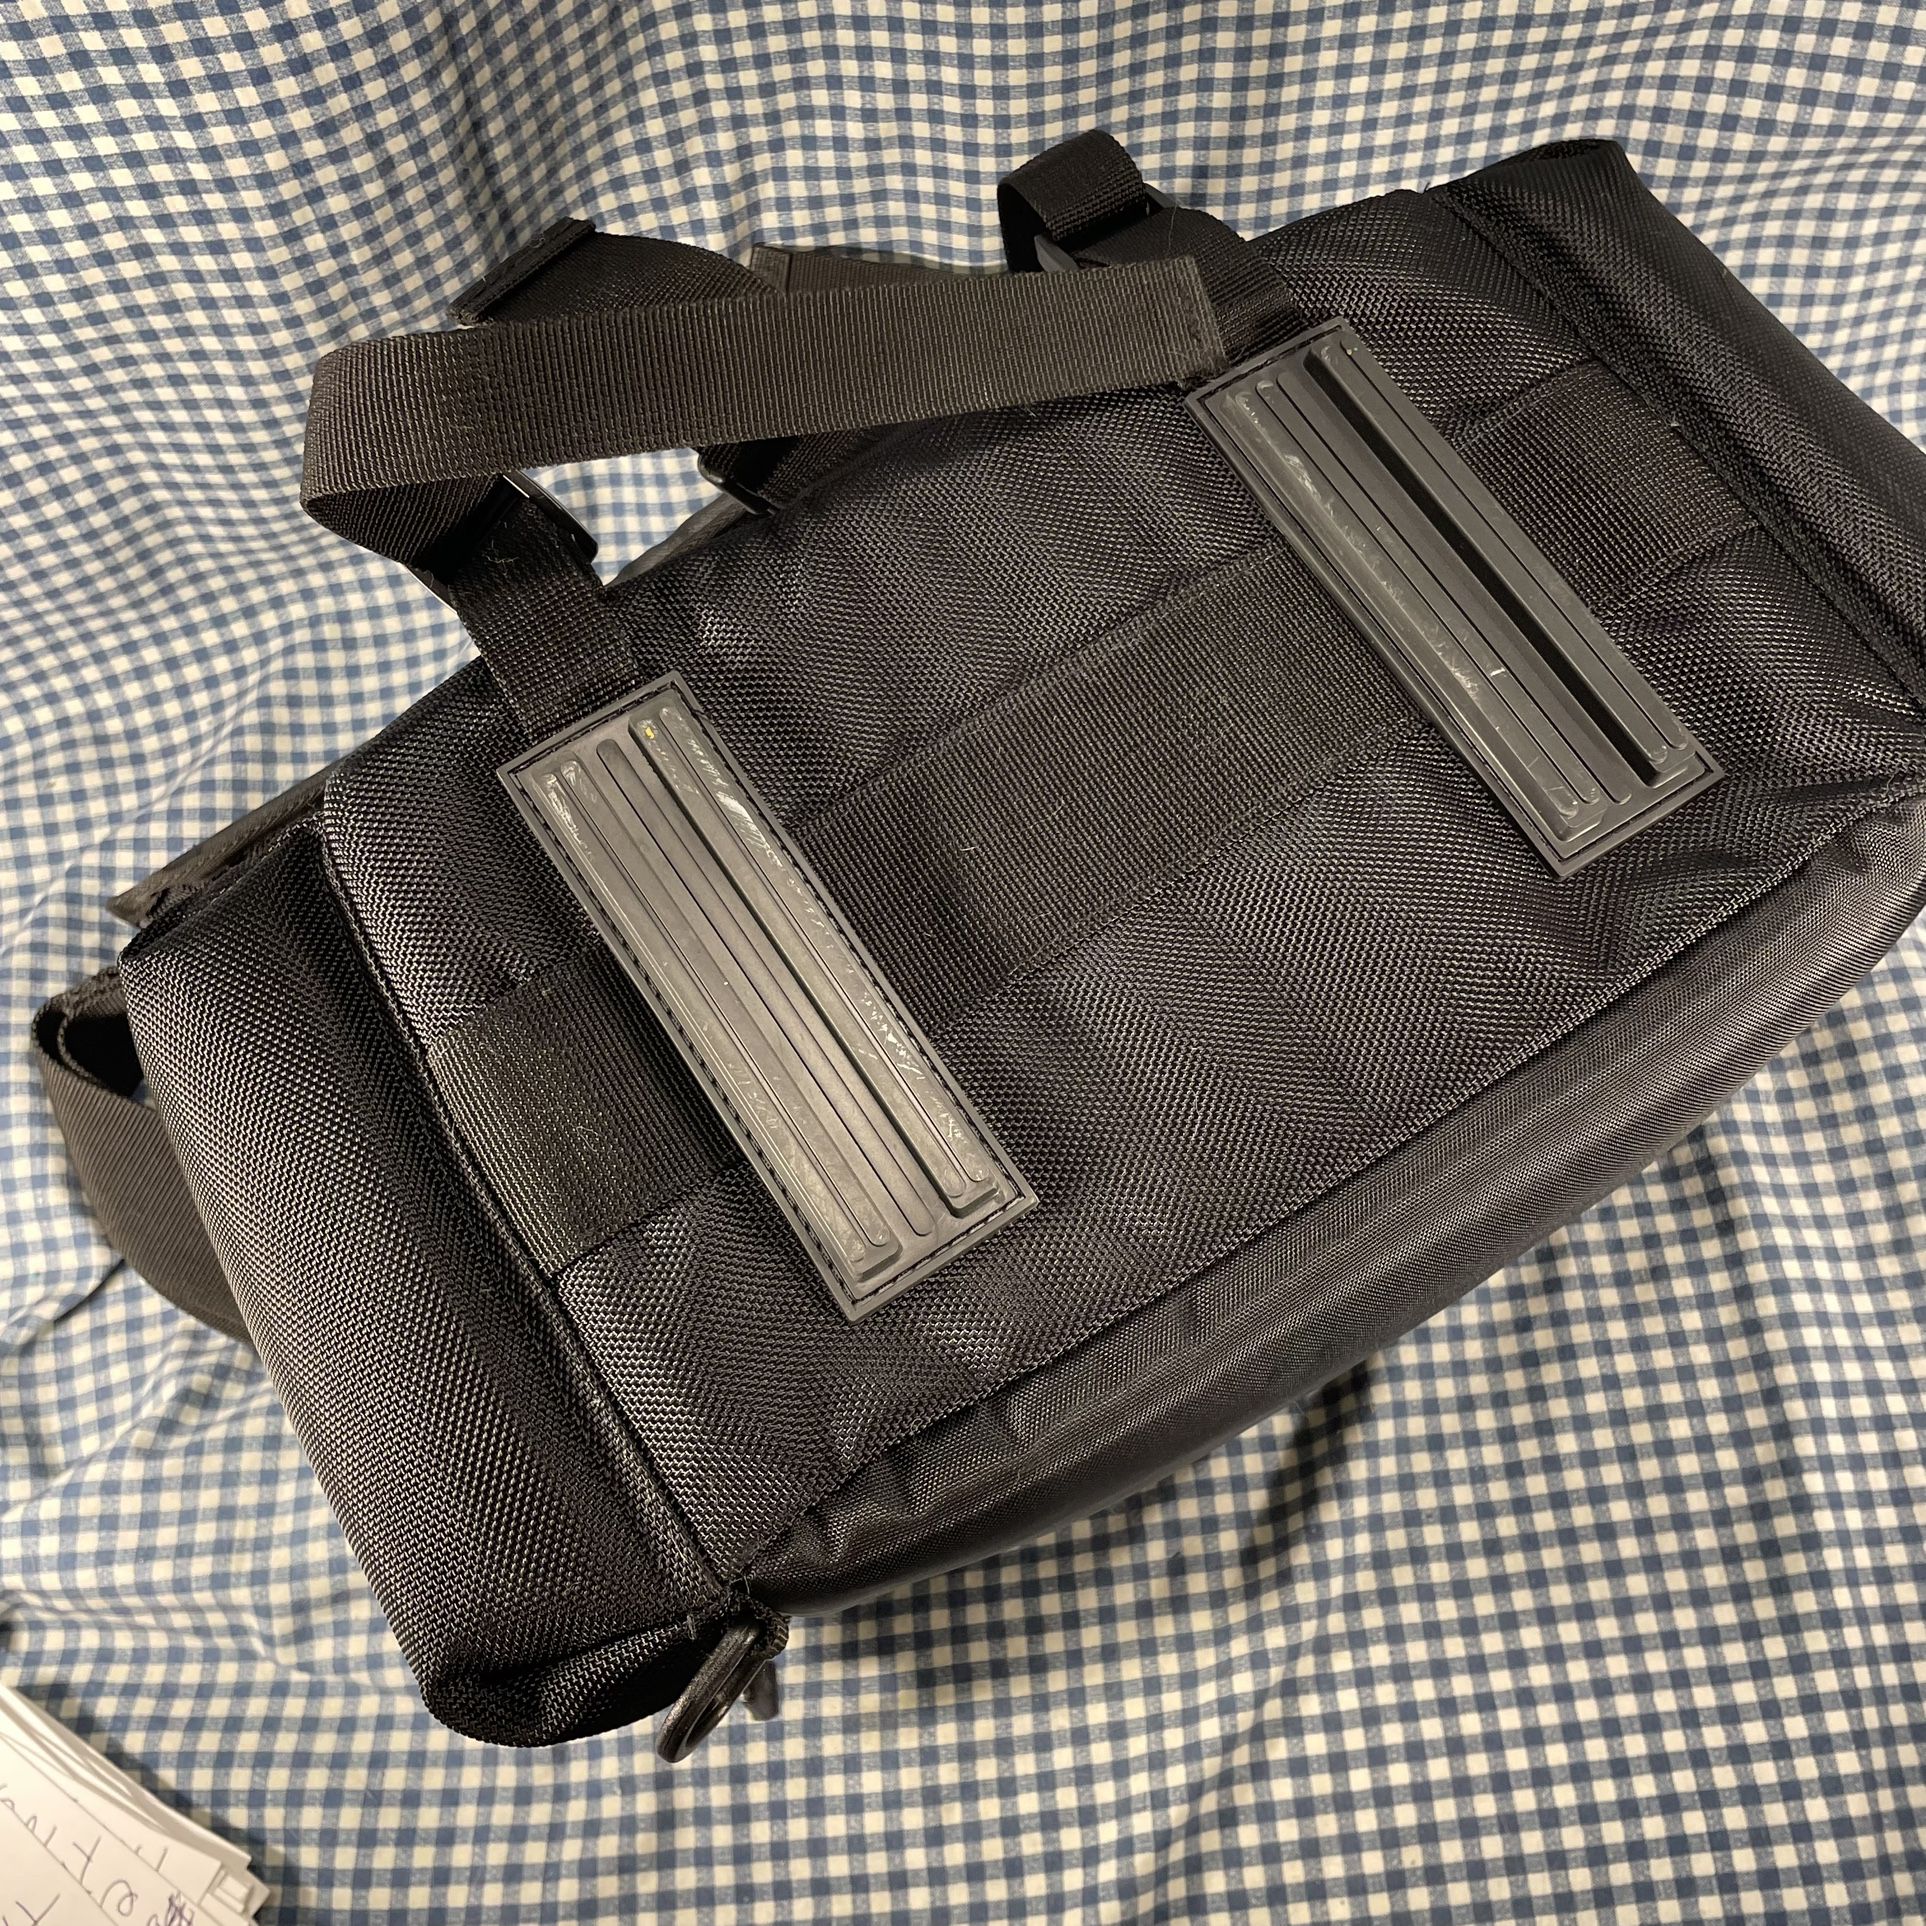 Canon Rebel Large Camera Case Bag